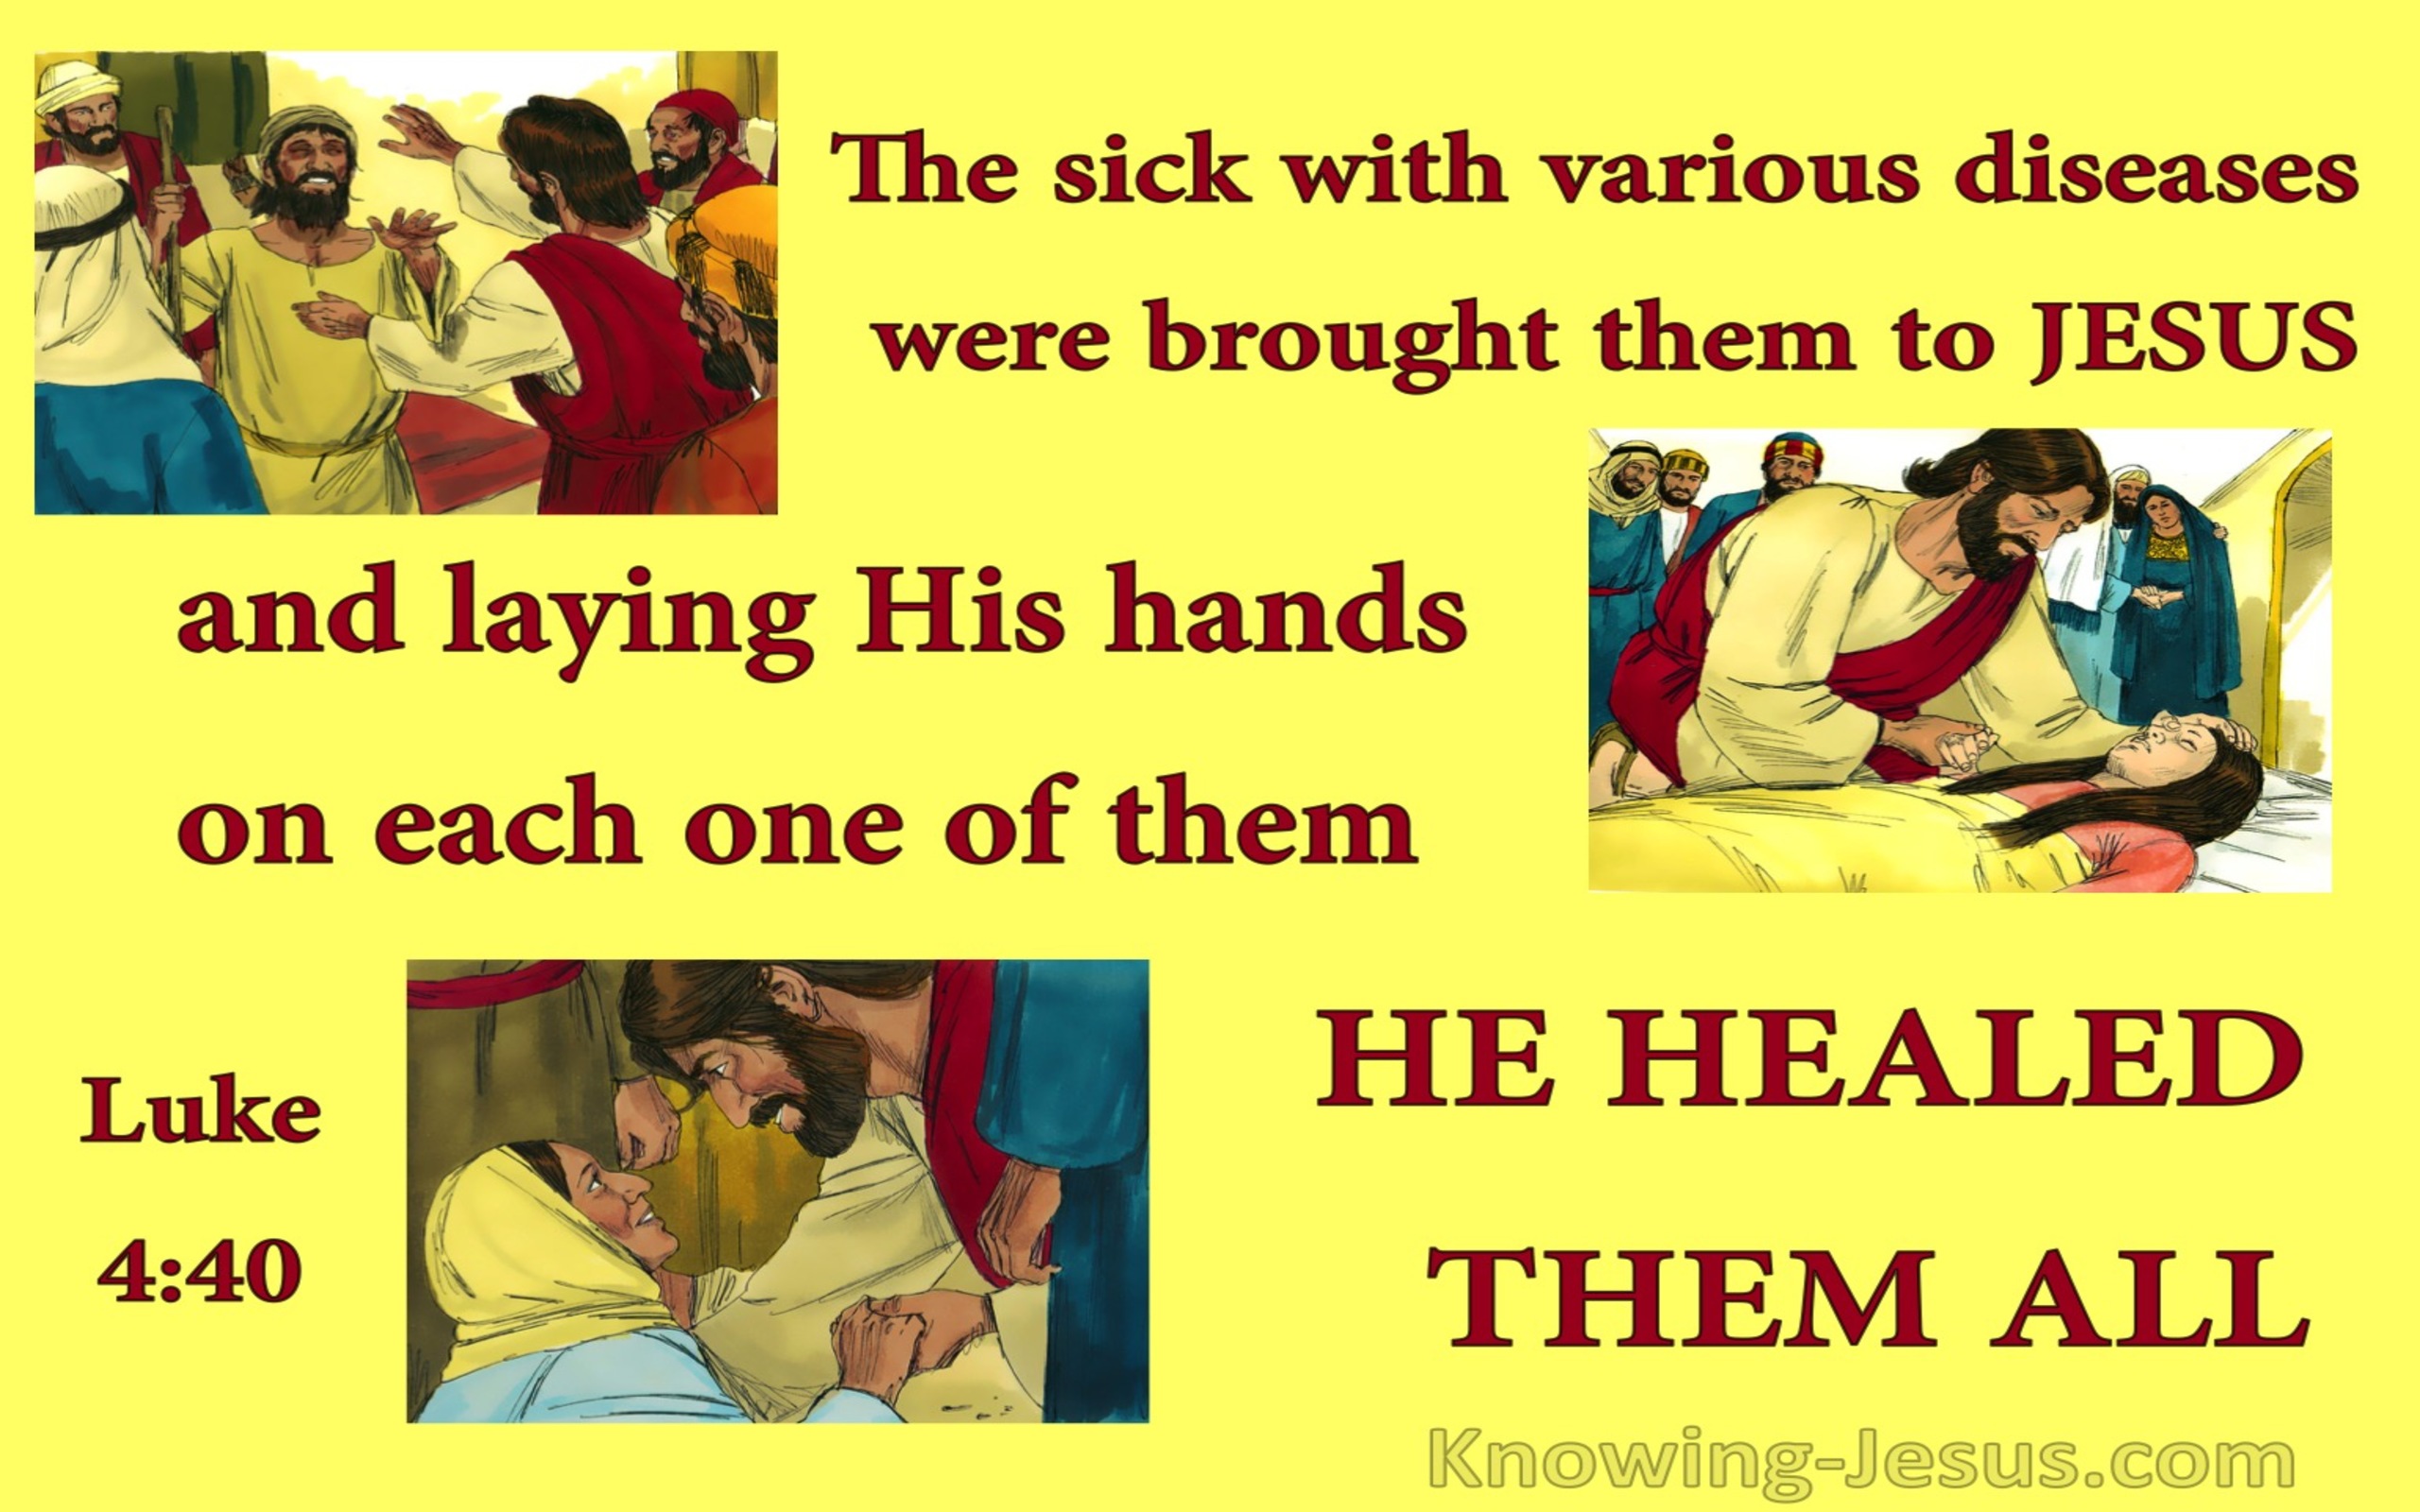 Luke 4:40 While The Sun Set He Healed Them (yellow)